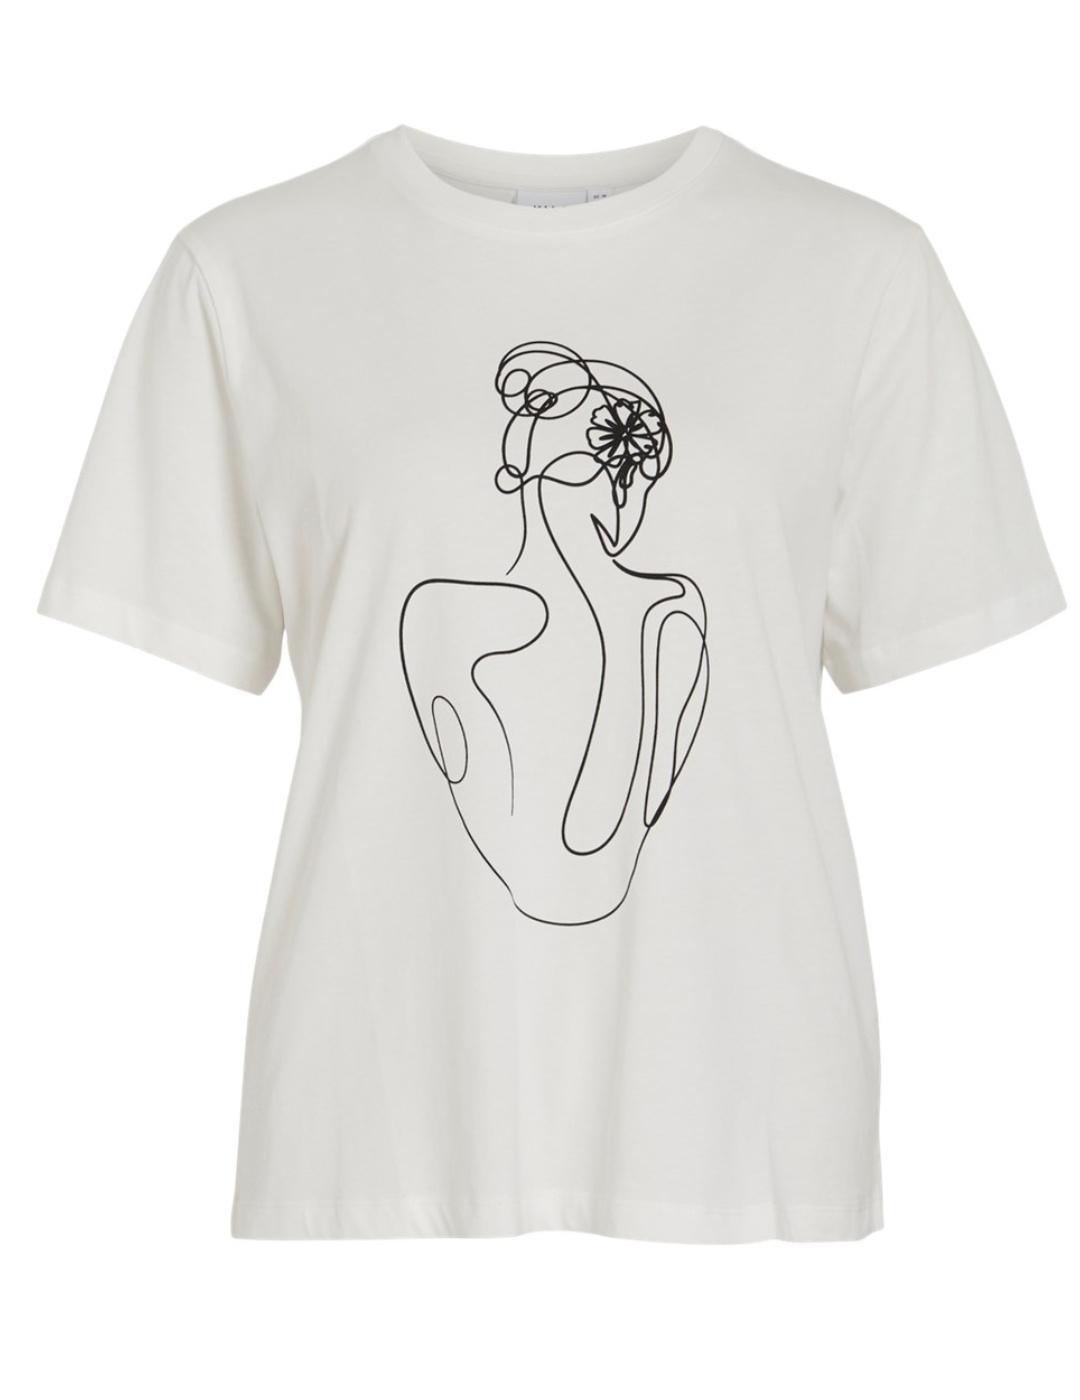 Camiseta Vila Sybil blanca dibujo manga corta de mujer